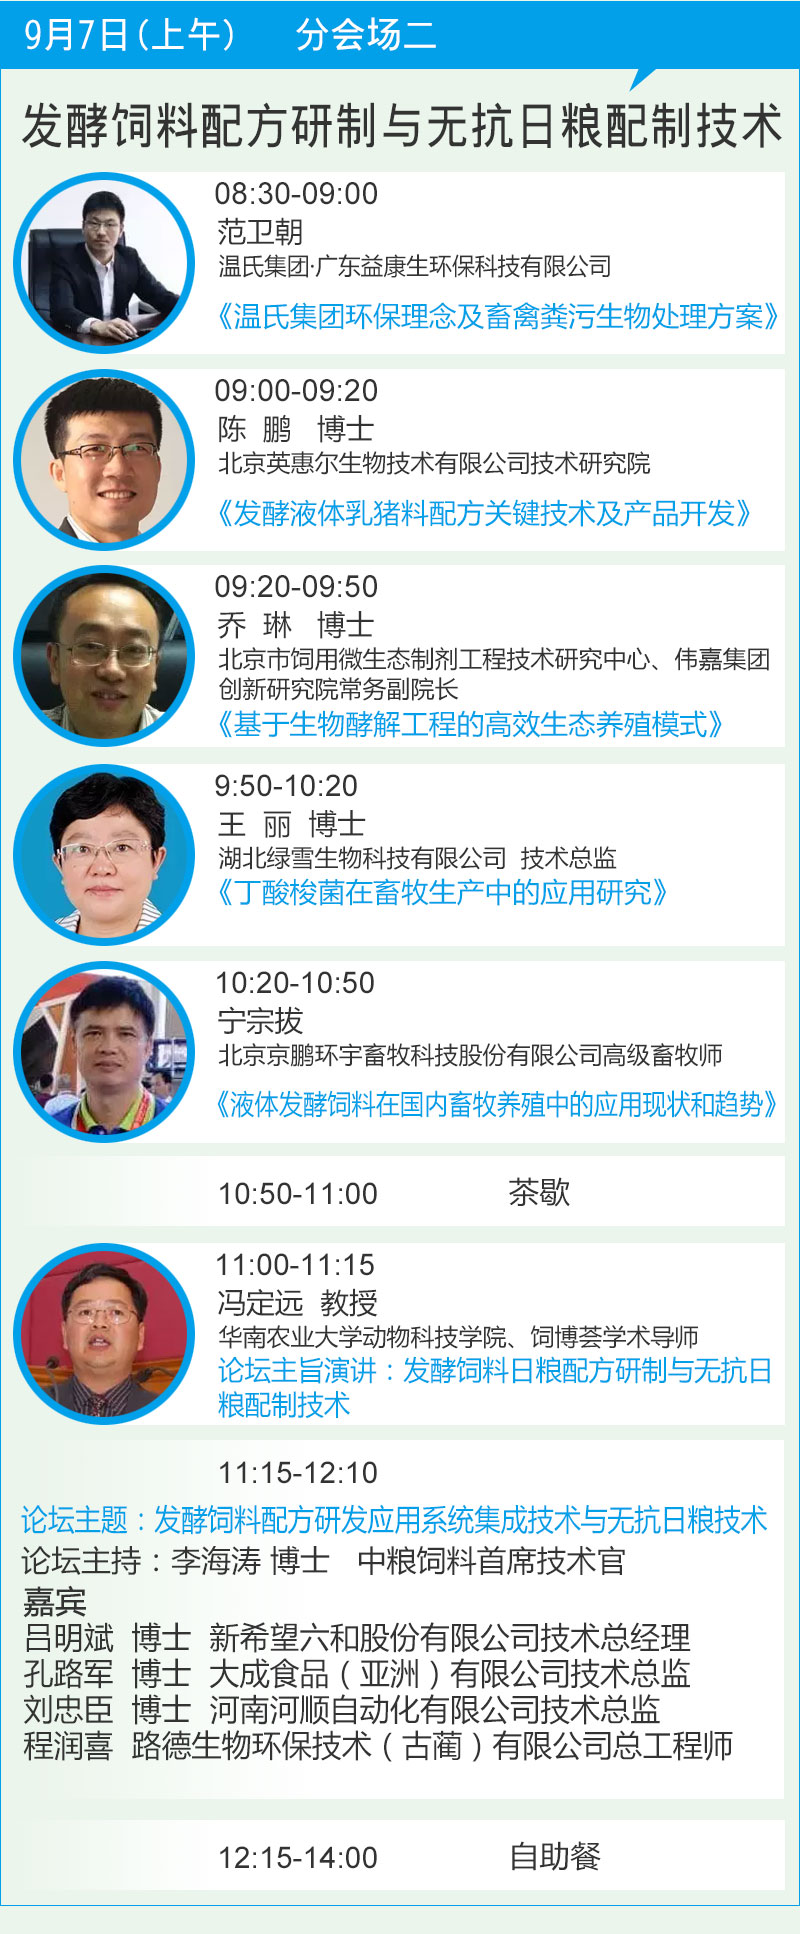 BFC﹒2016第四届中国生物饲料科技大会